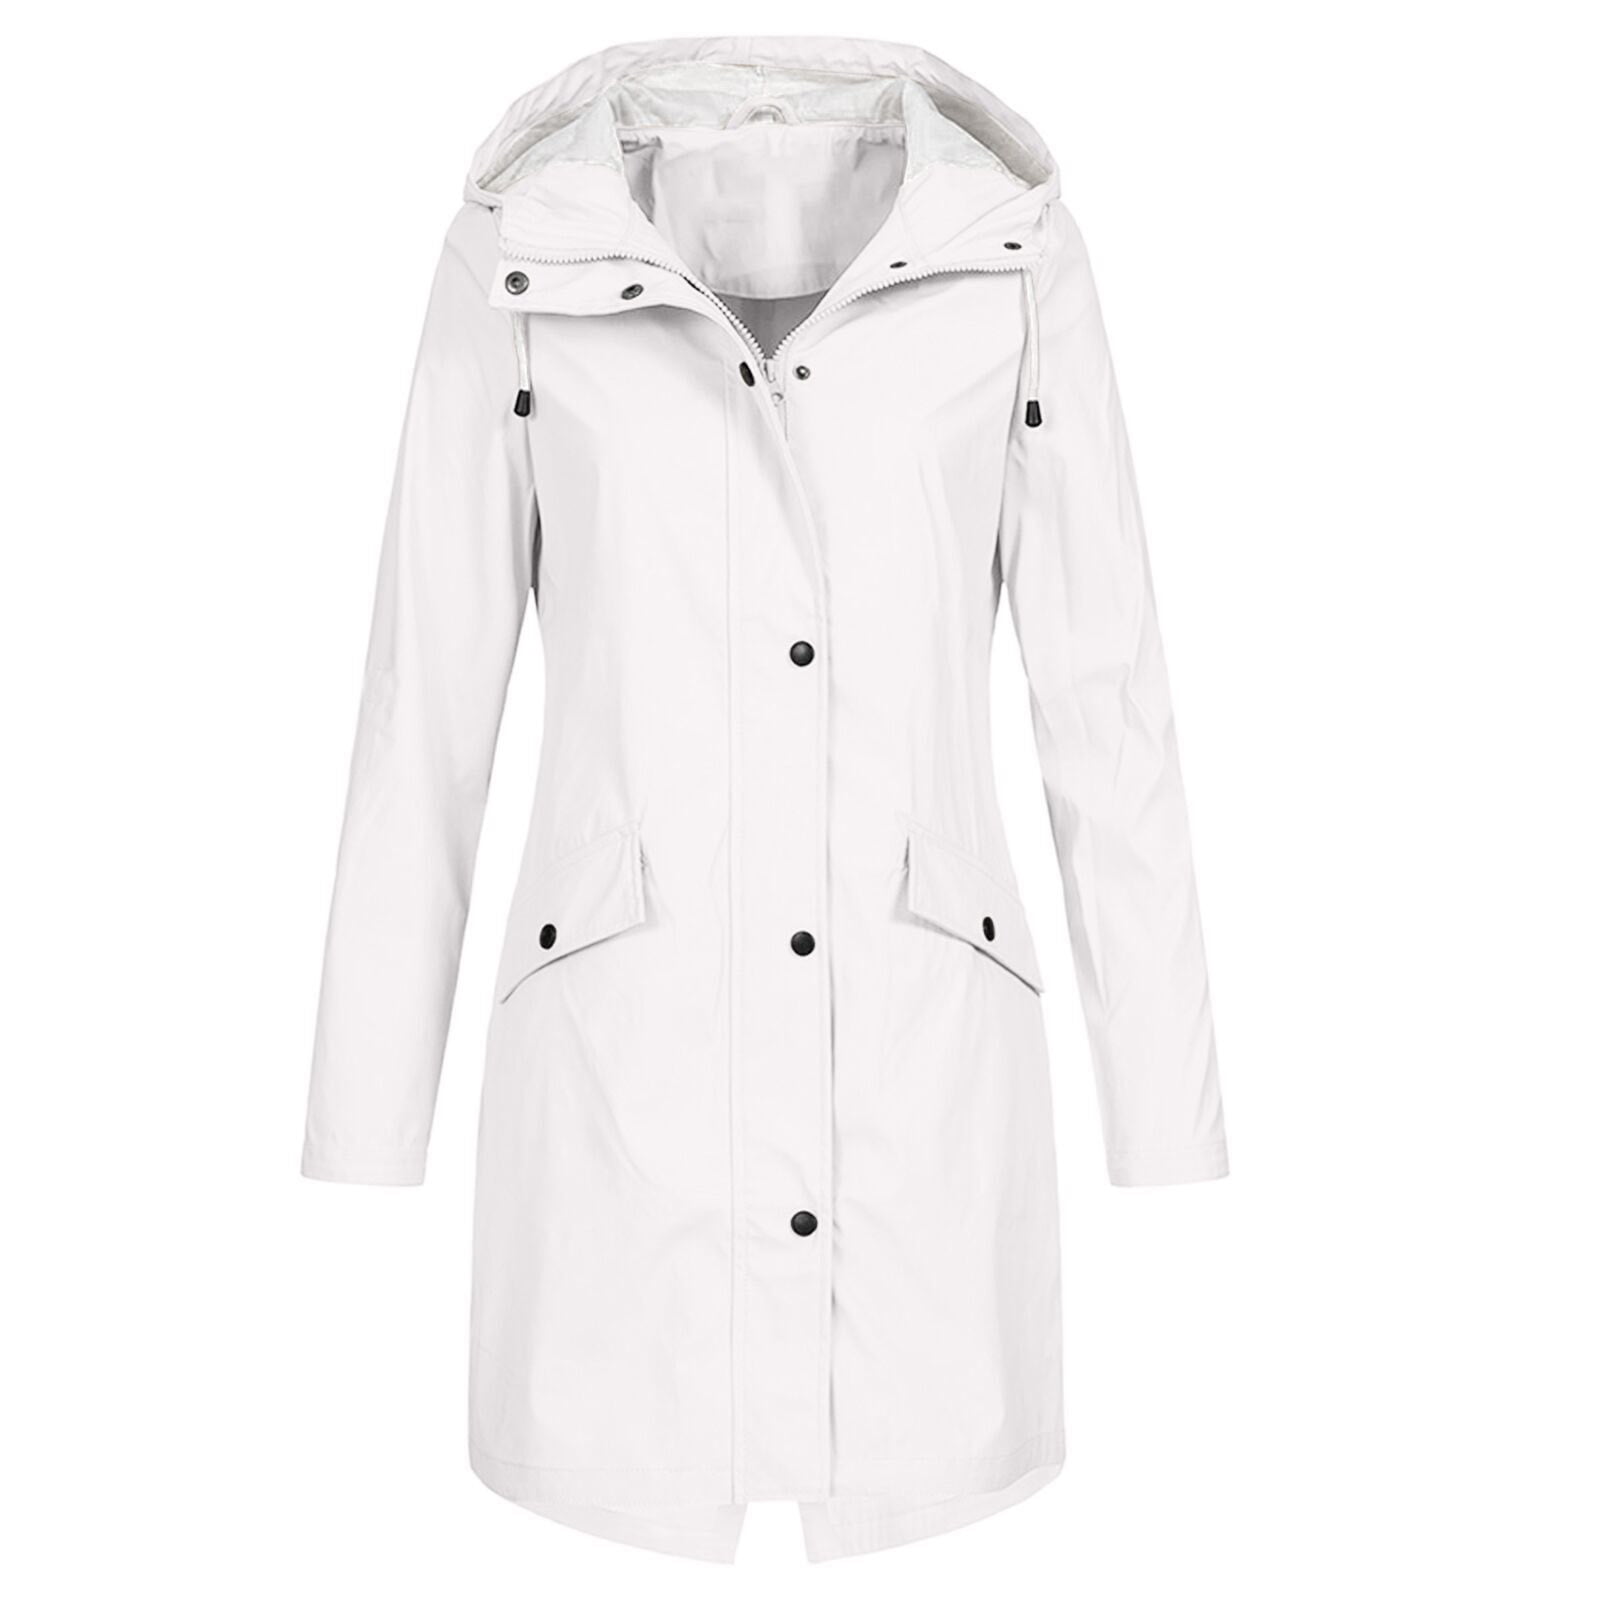 symoid Womens Rain Coats & Jackets- Solid Rain Jacket Outdoor Hooded ...